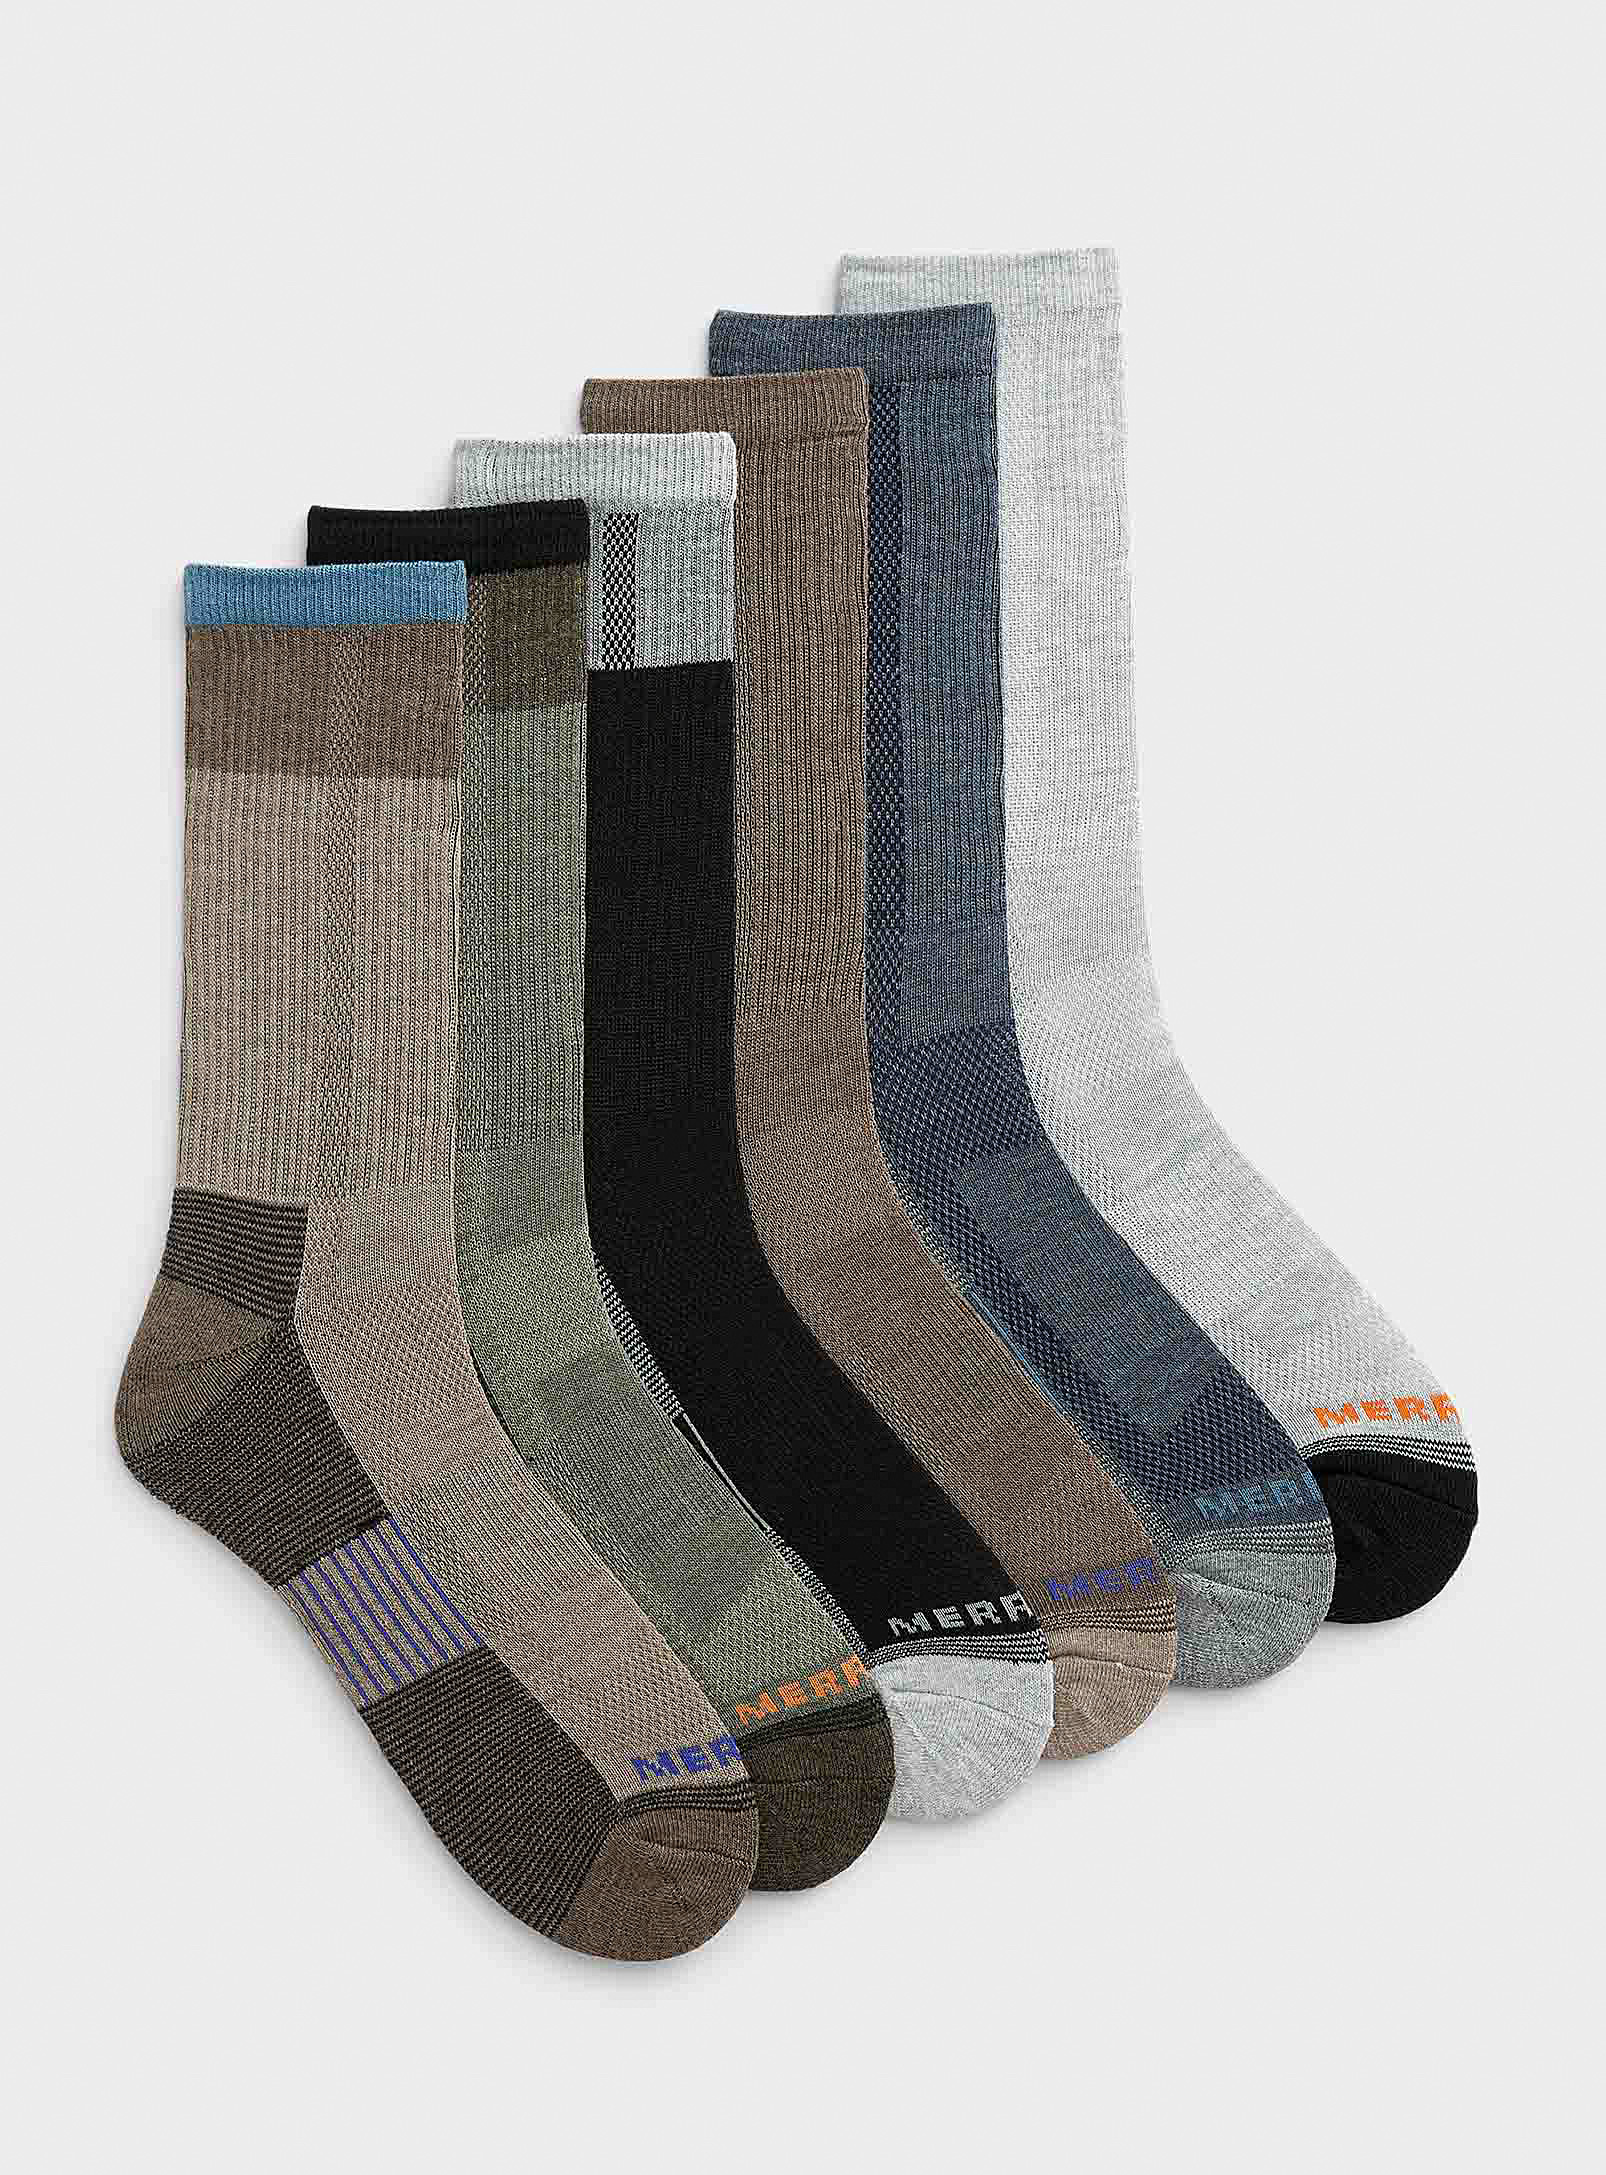 Merrell Neutral Reinforced Socks 6-pack In Brown